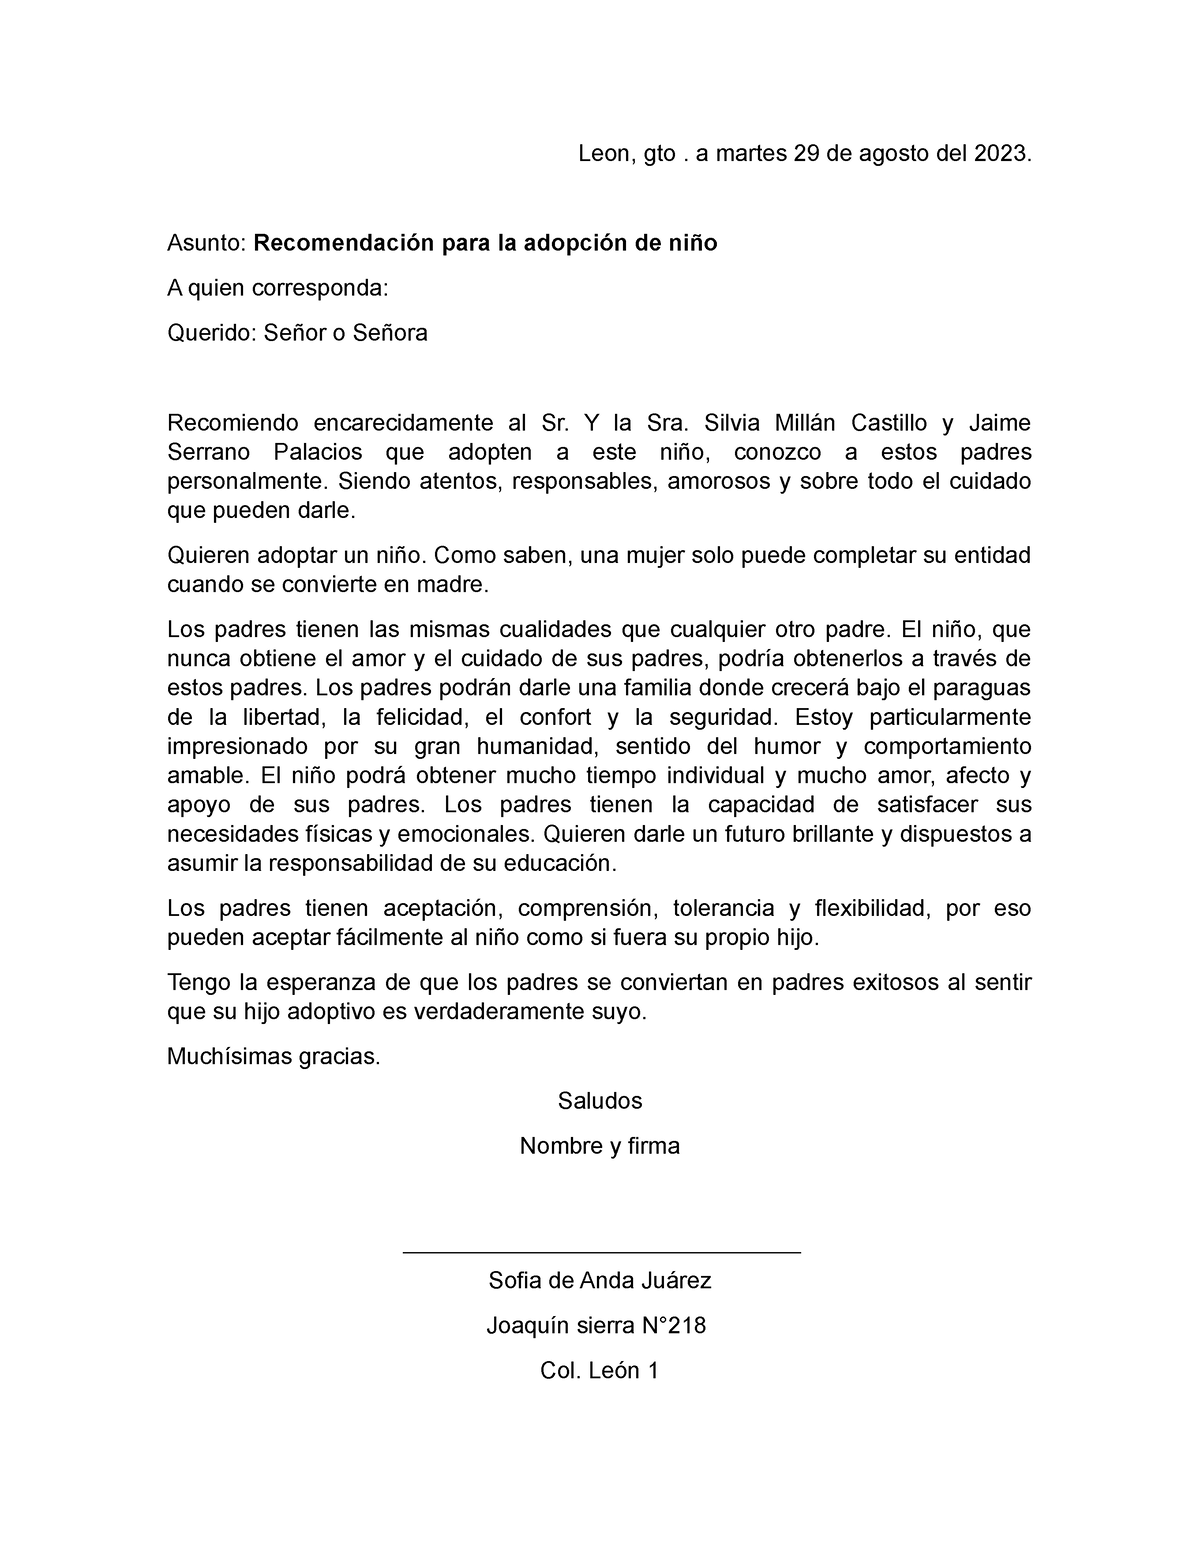 Carta De Recomendacion Adopcion Leon Gto A Martes 29 De Agosto Del